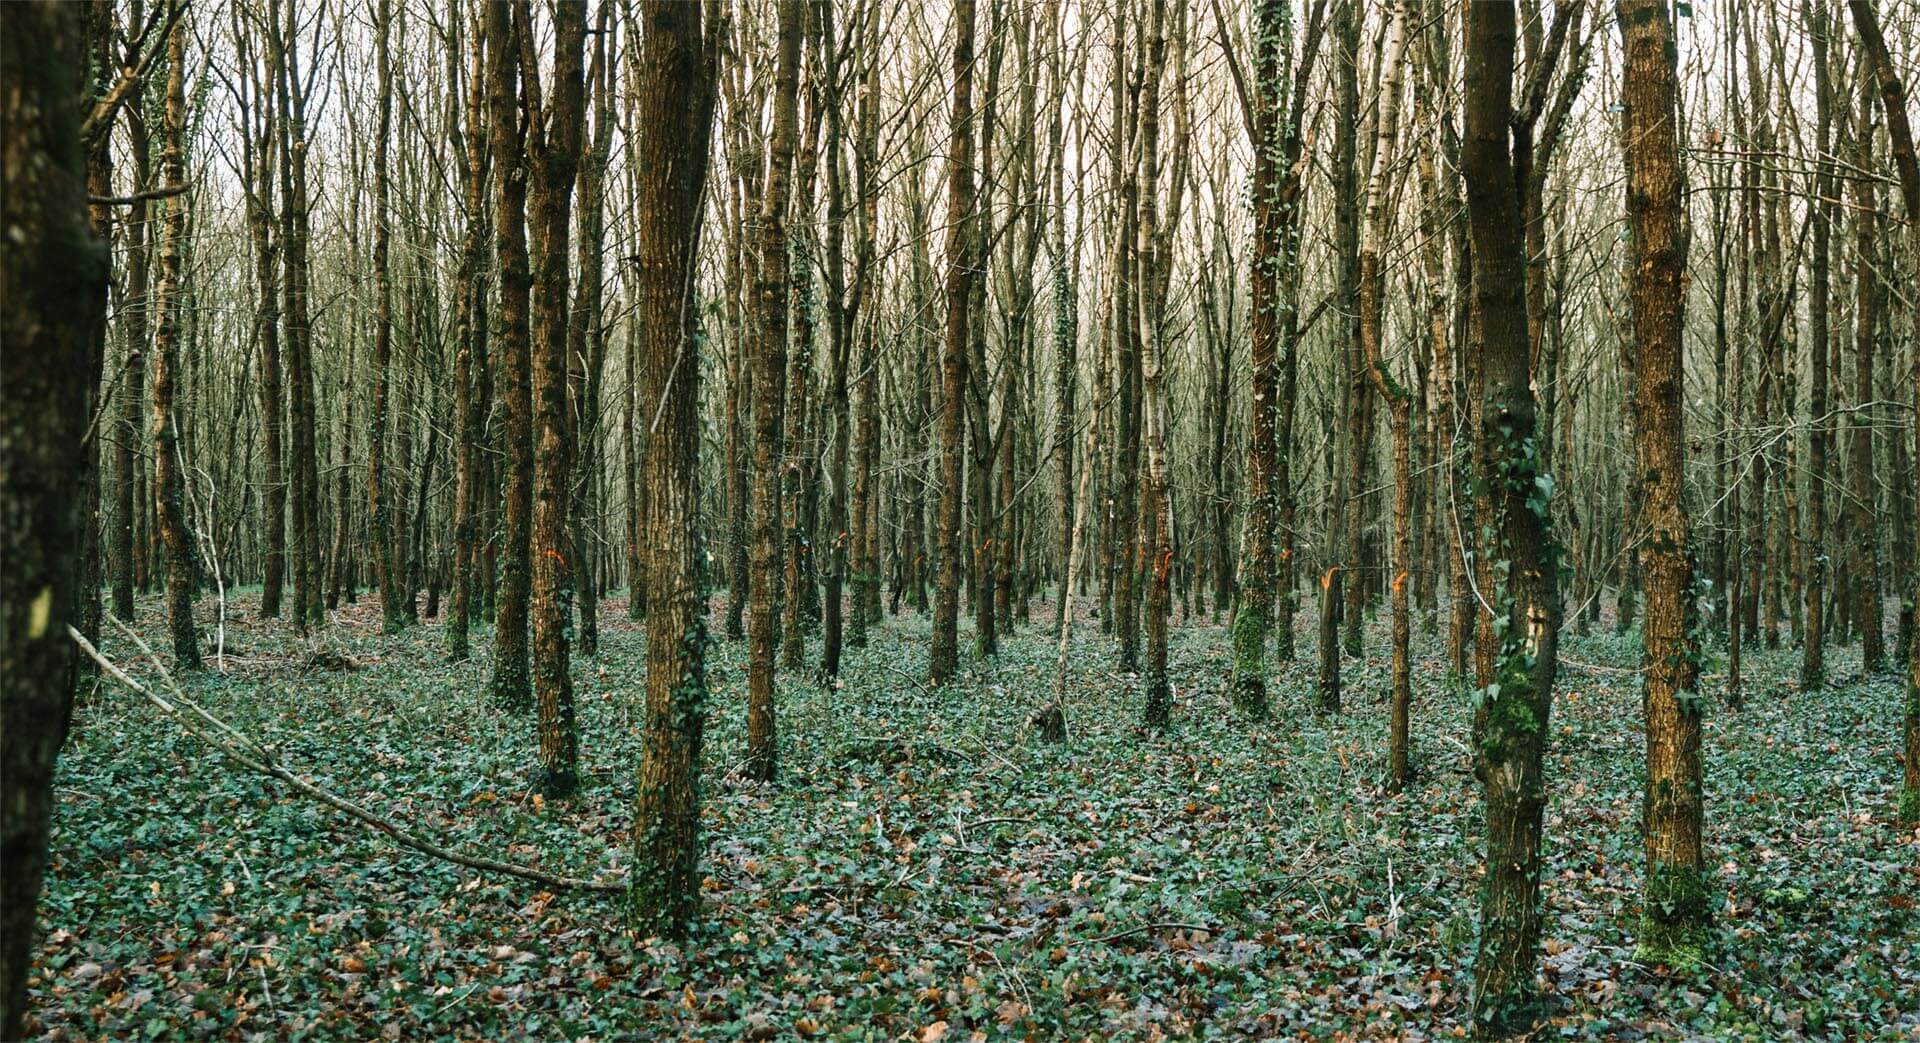 Preaux forest